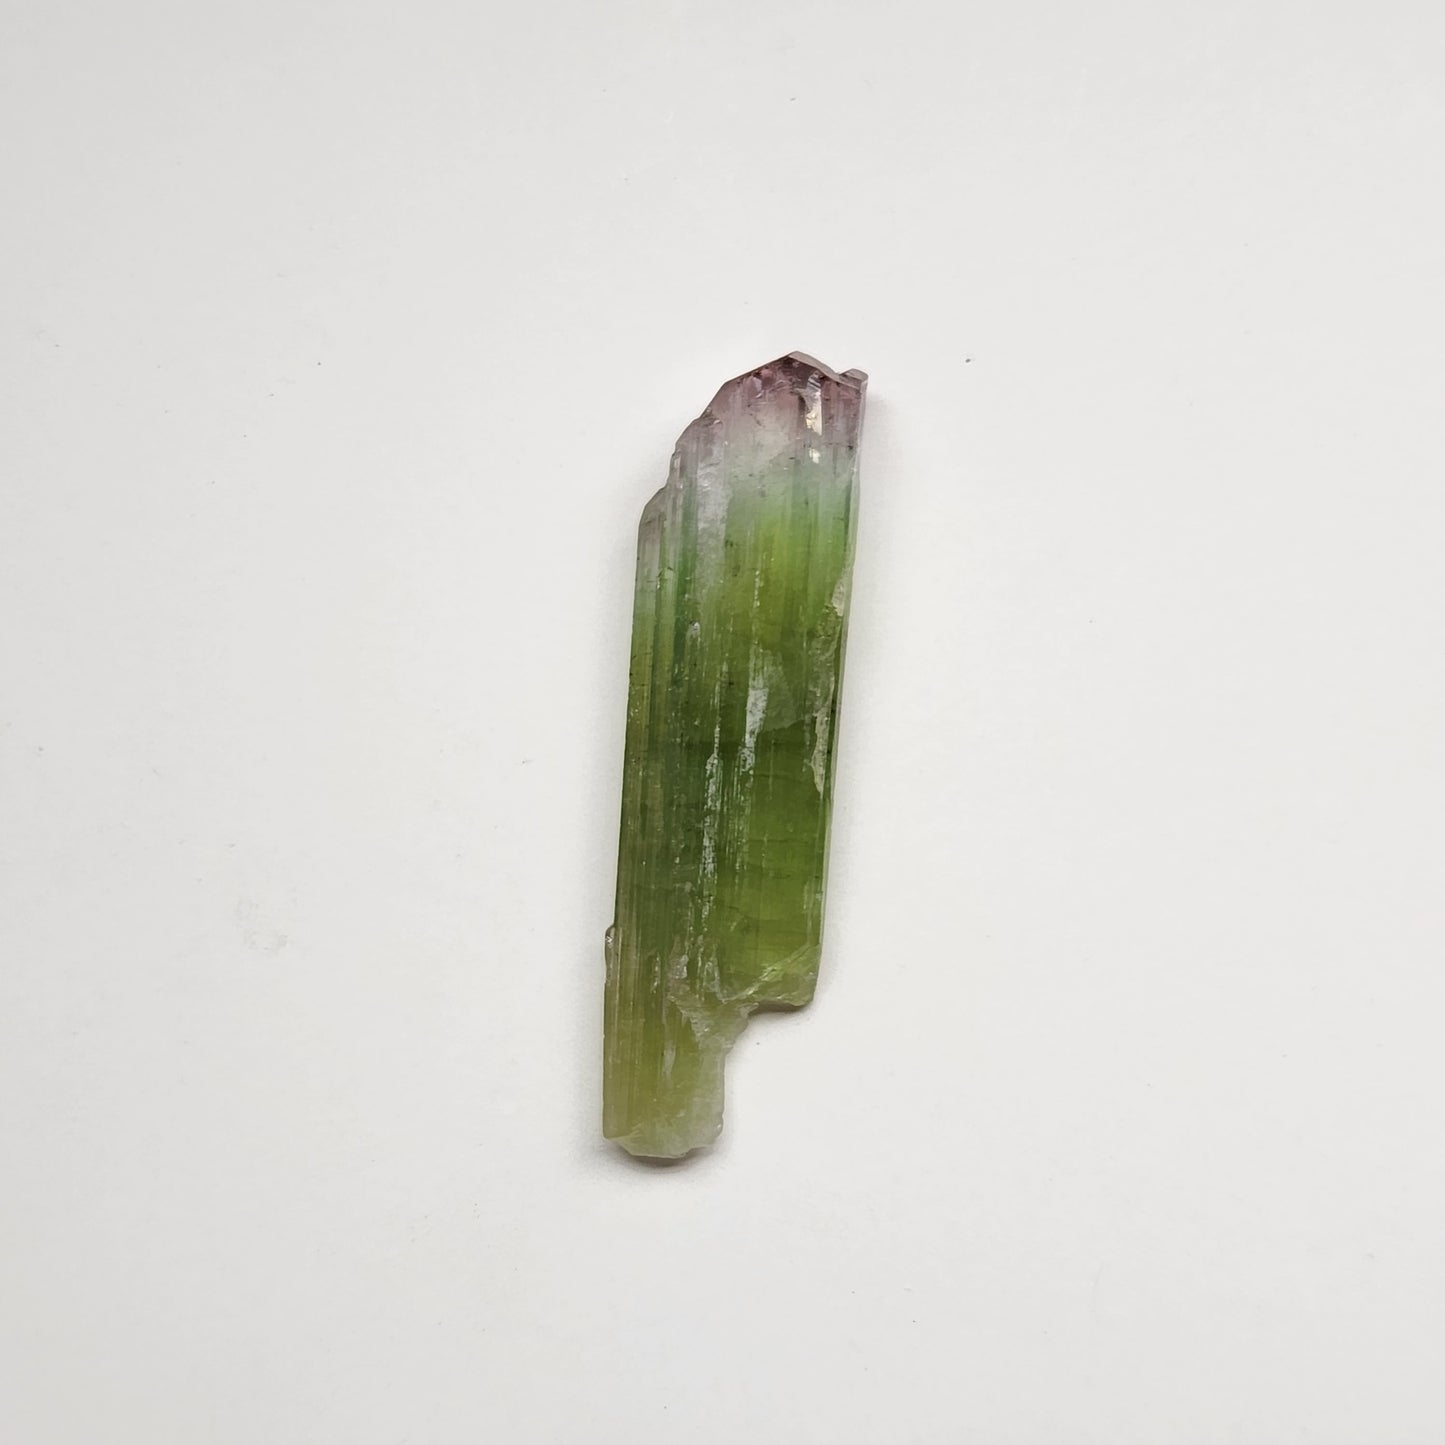 Bi-Colored Pink and Green Tourmaline Crystal Specimen